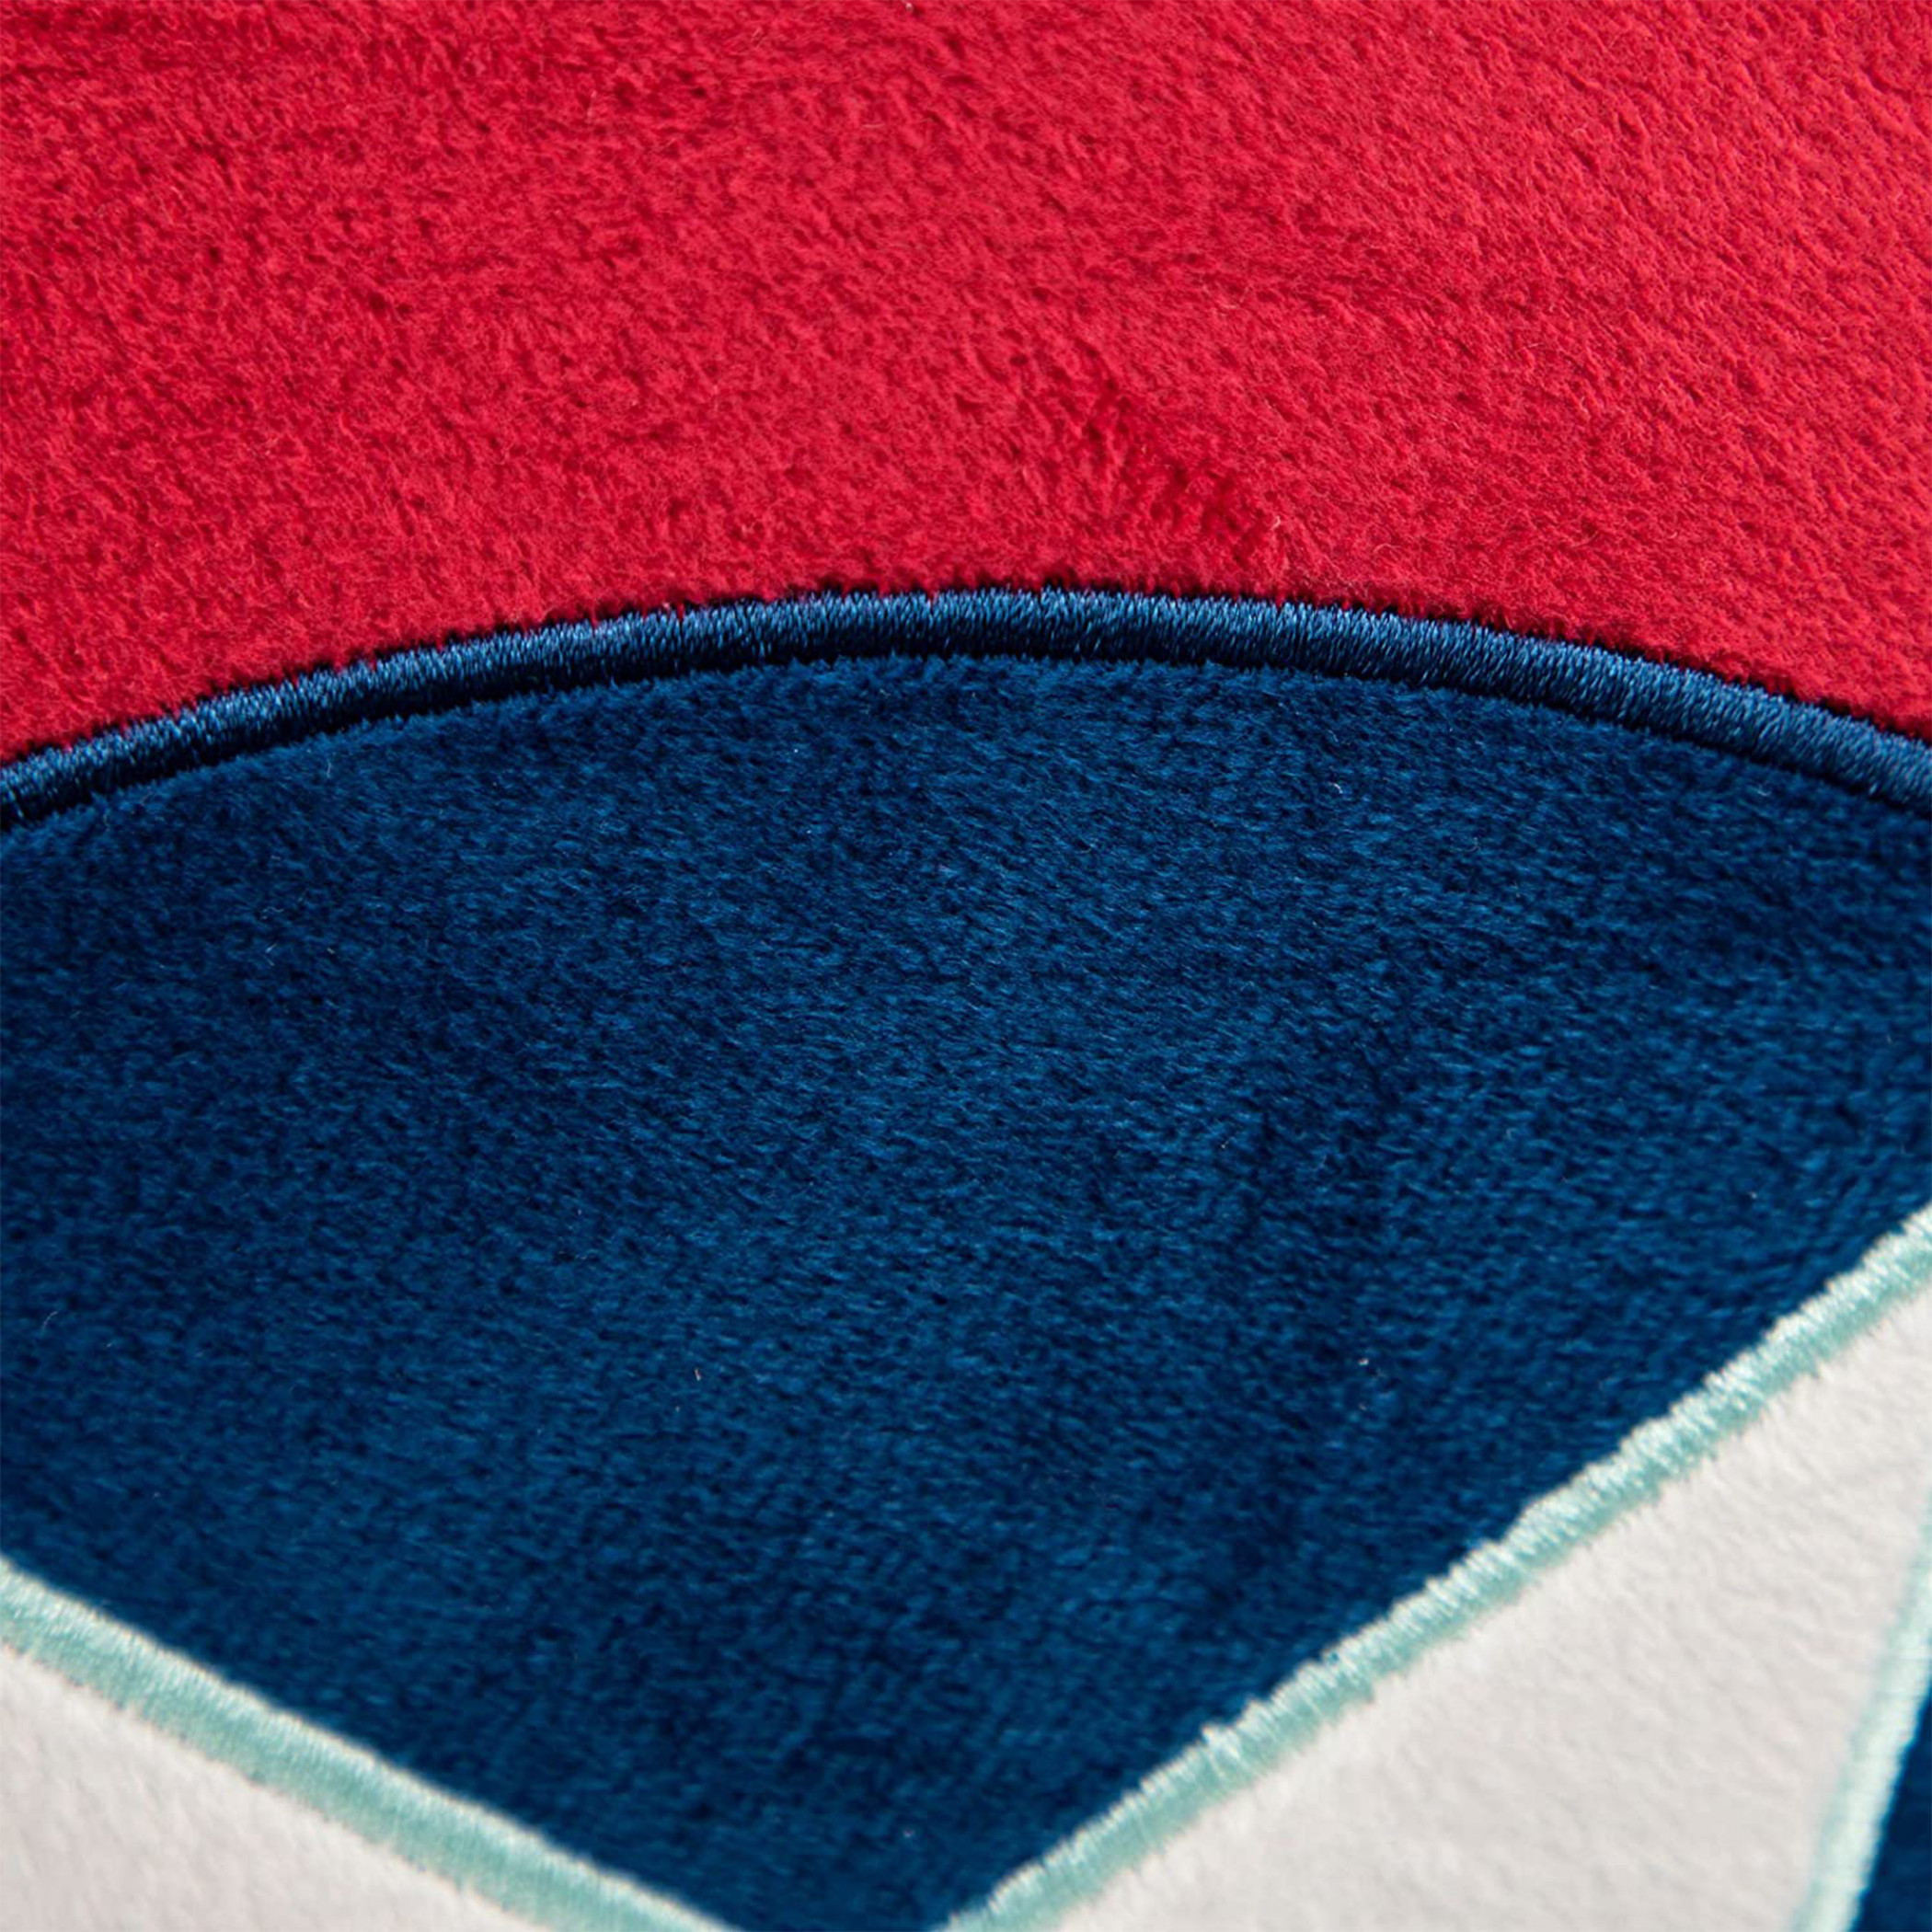 Marvel Comics Captain America Shield 13" Decorative Pillow